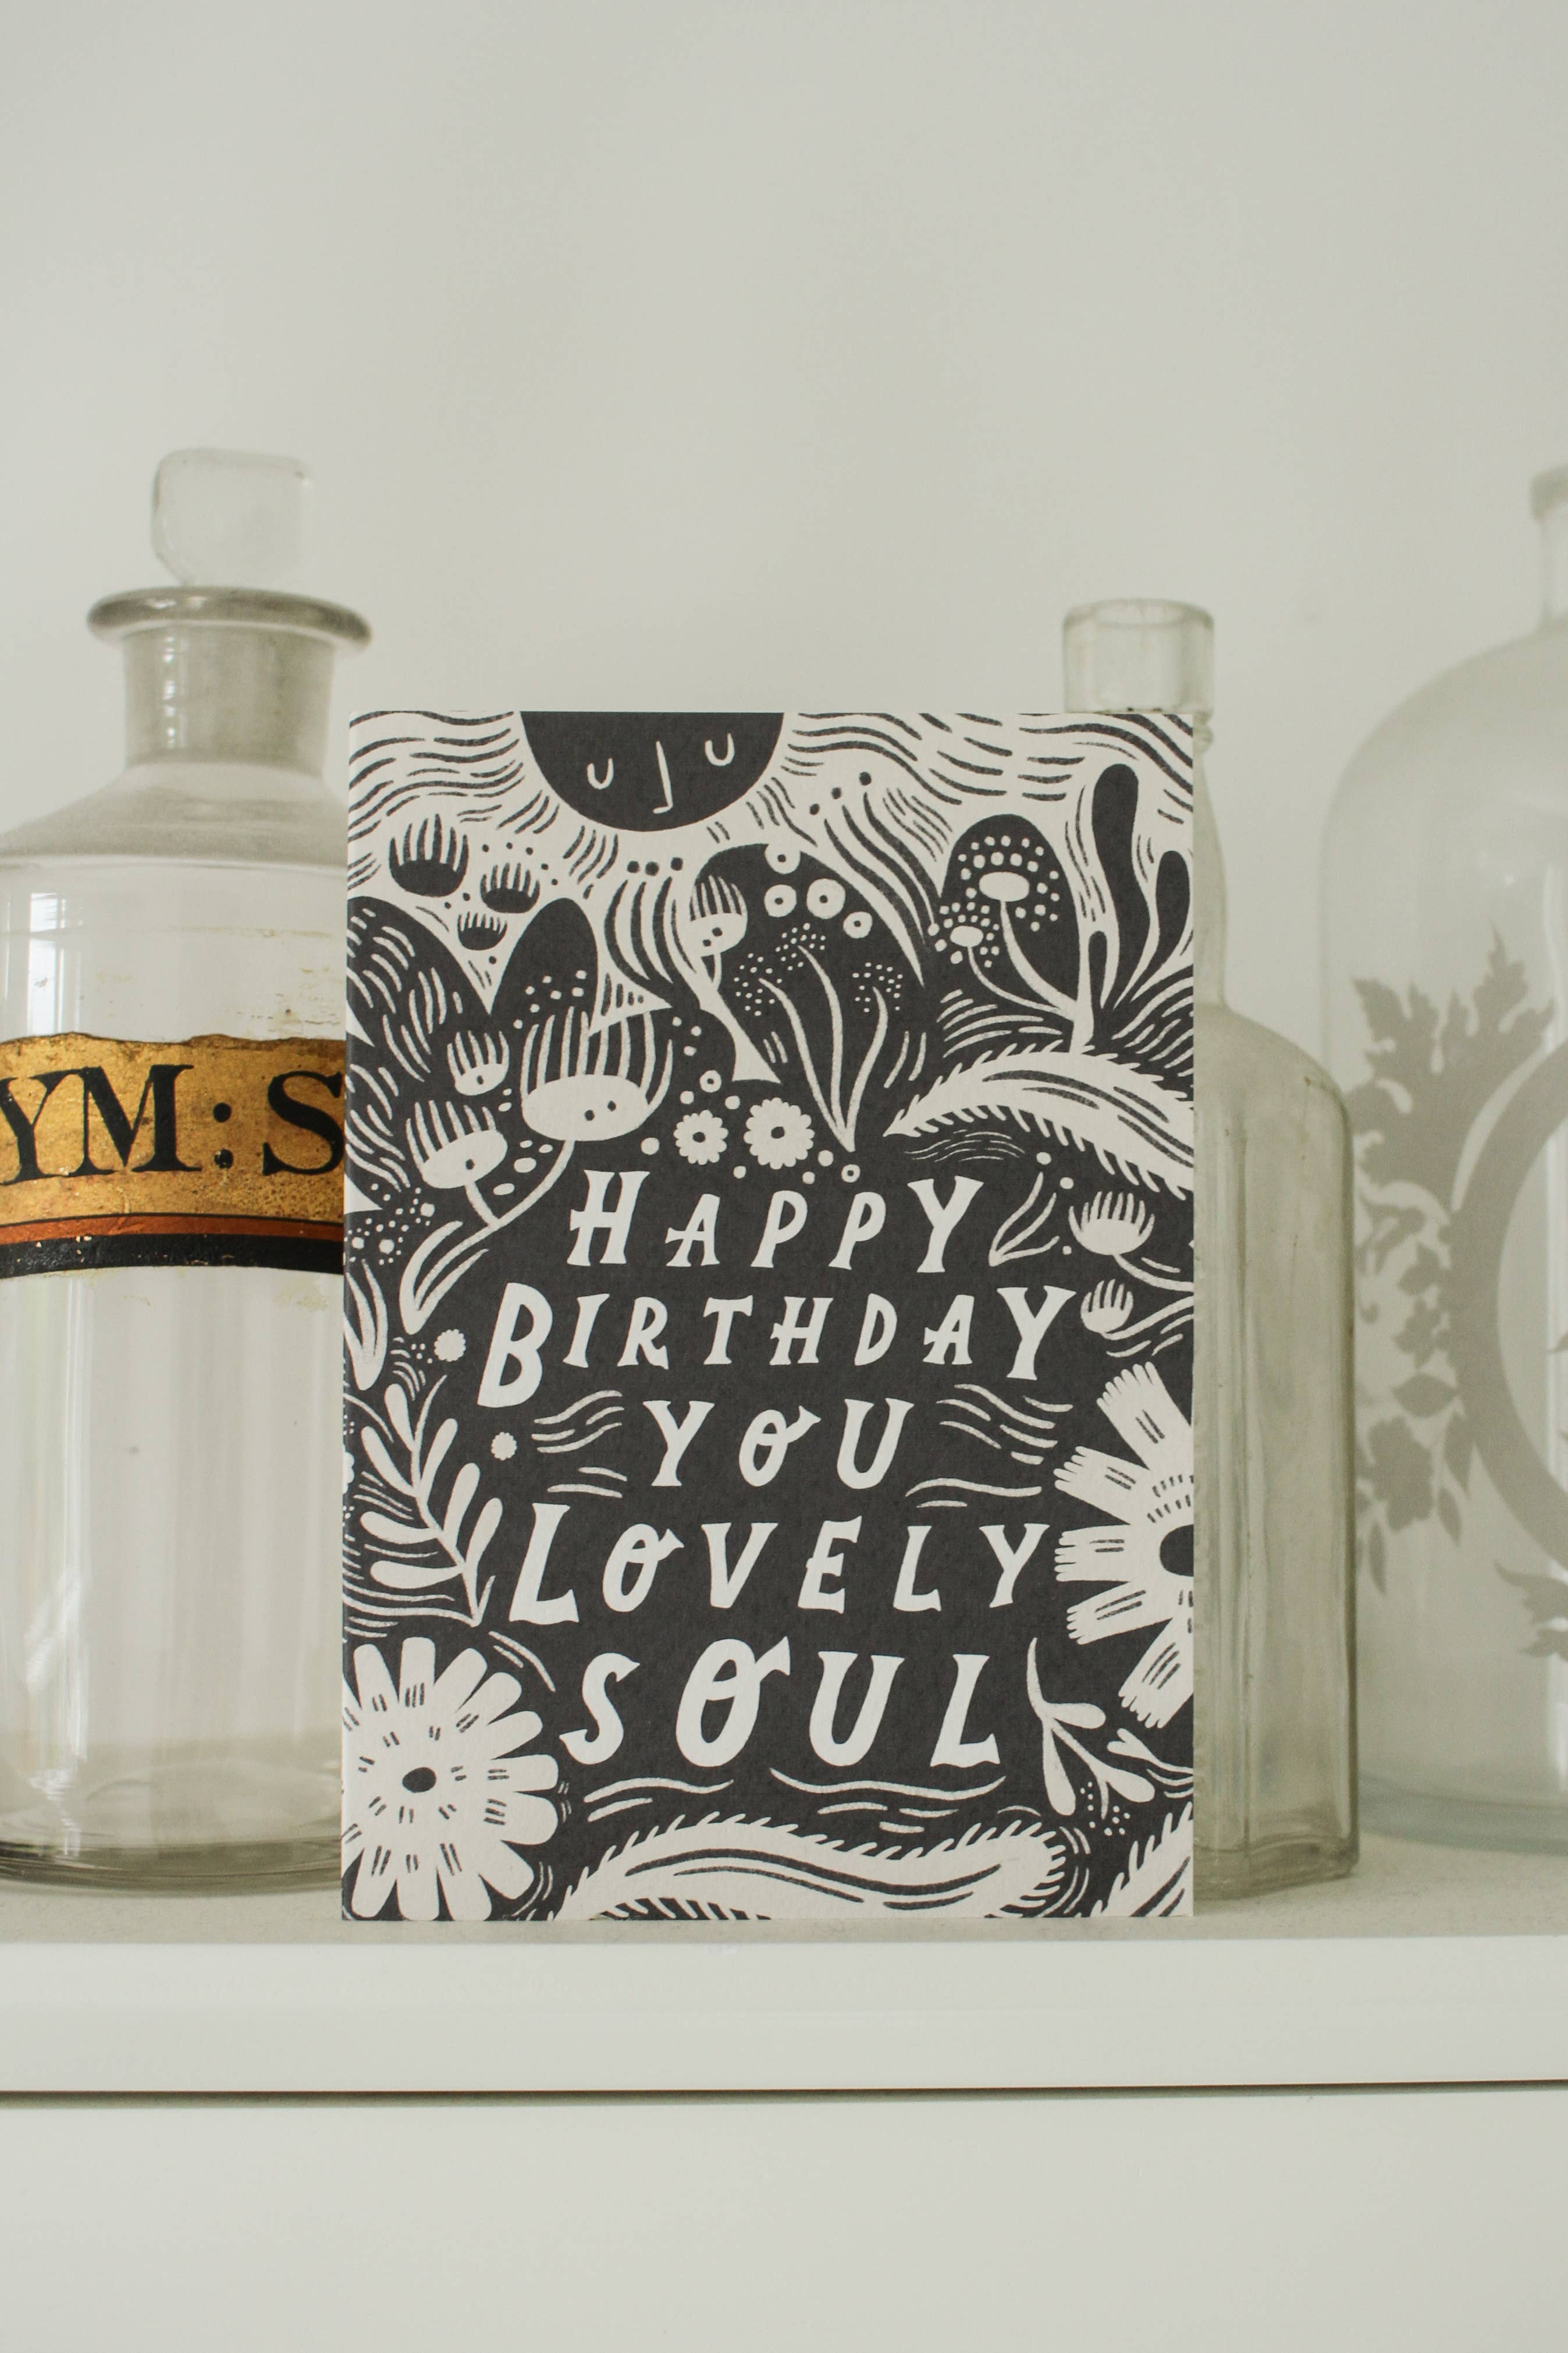 'Happy Birthday You Lovely Soul' Birthday Card